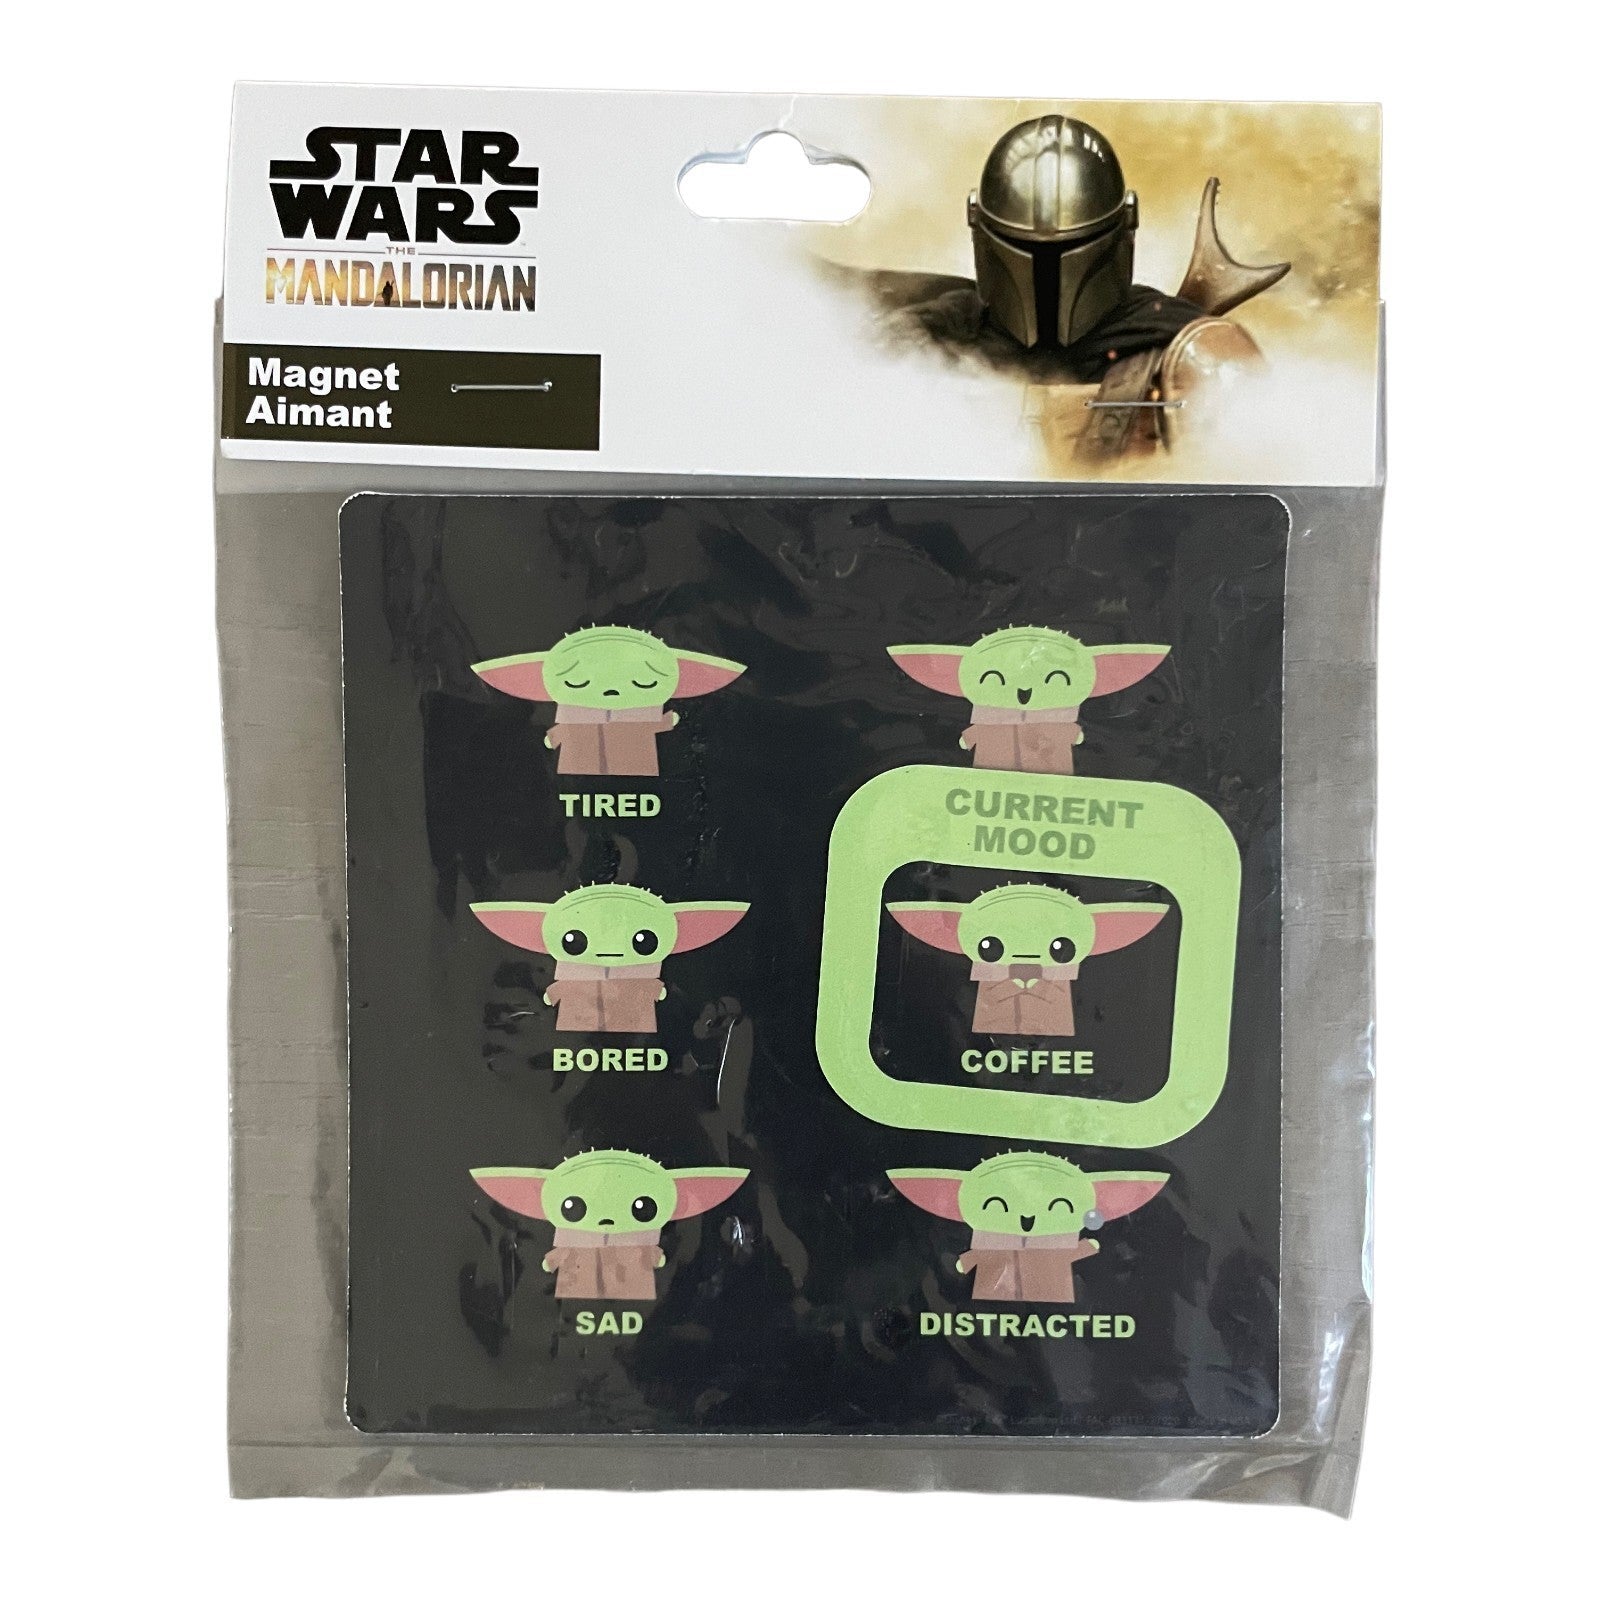 Star Wars Baby Yoda Moods Magnet - The Mandalorian